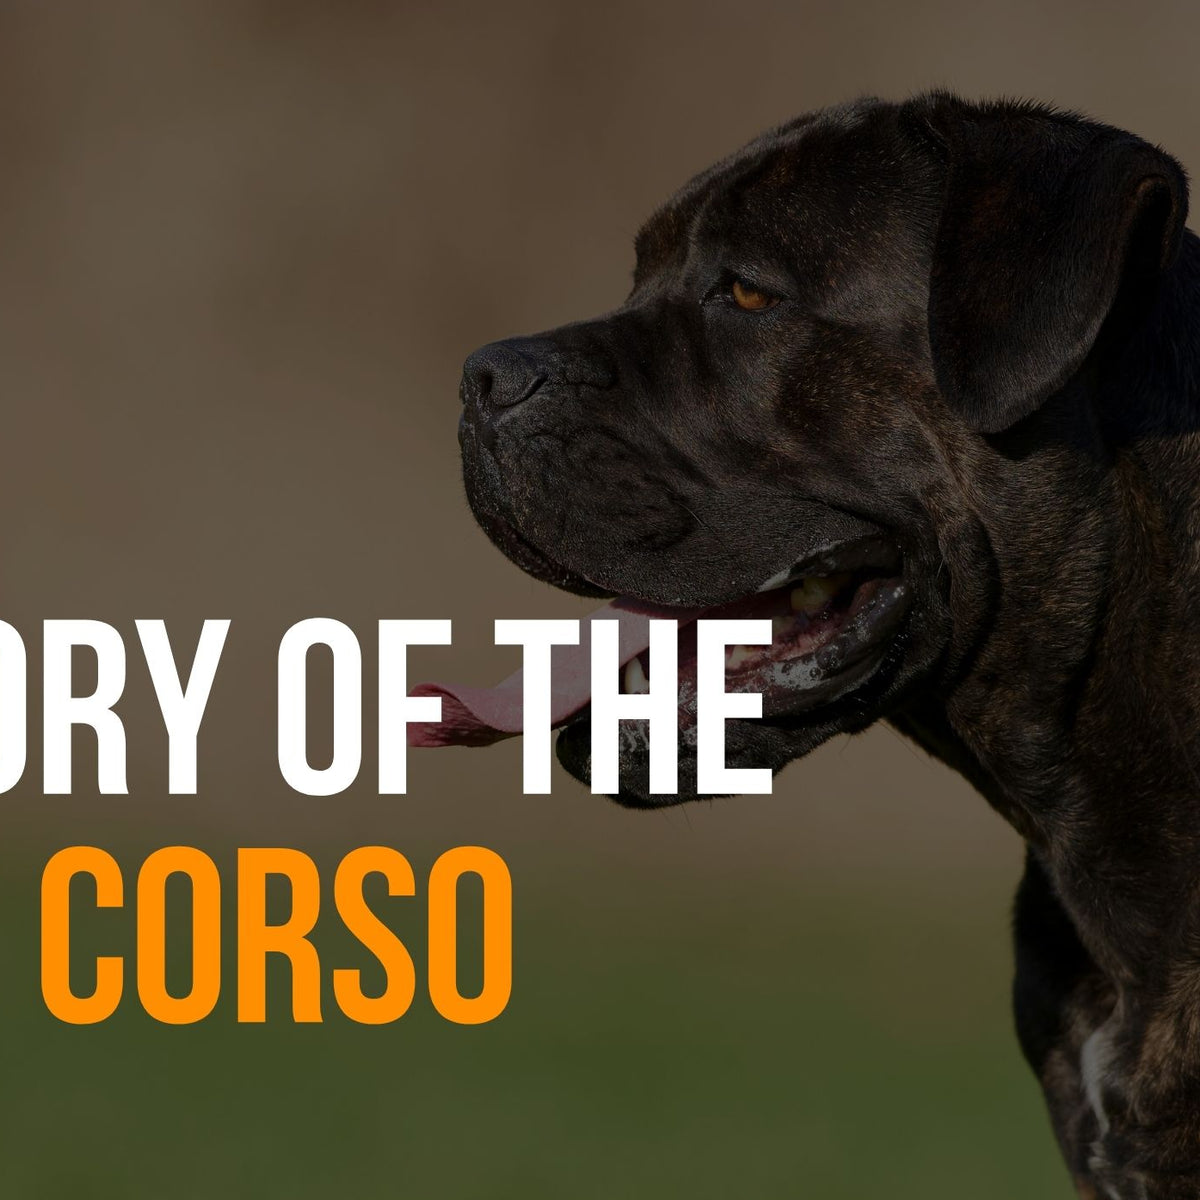 Cane Corso Dog Breed Information